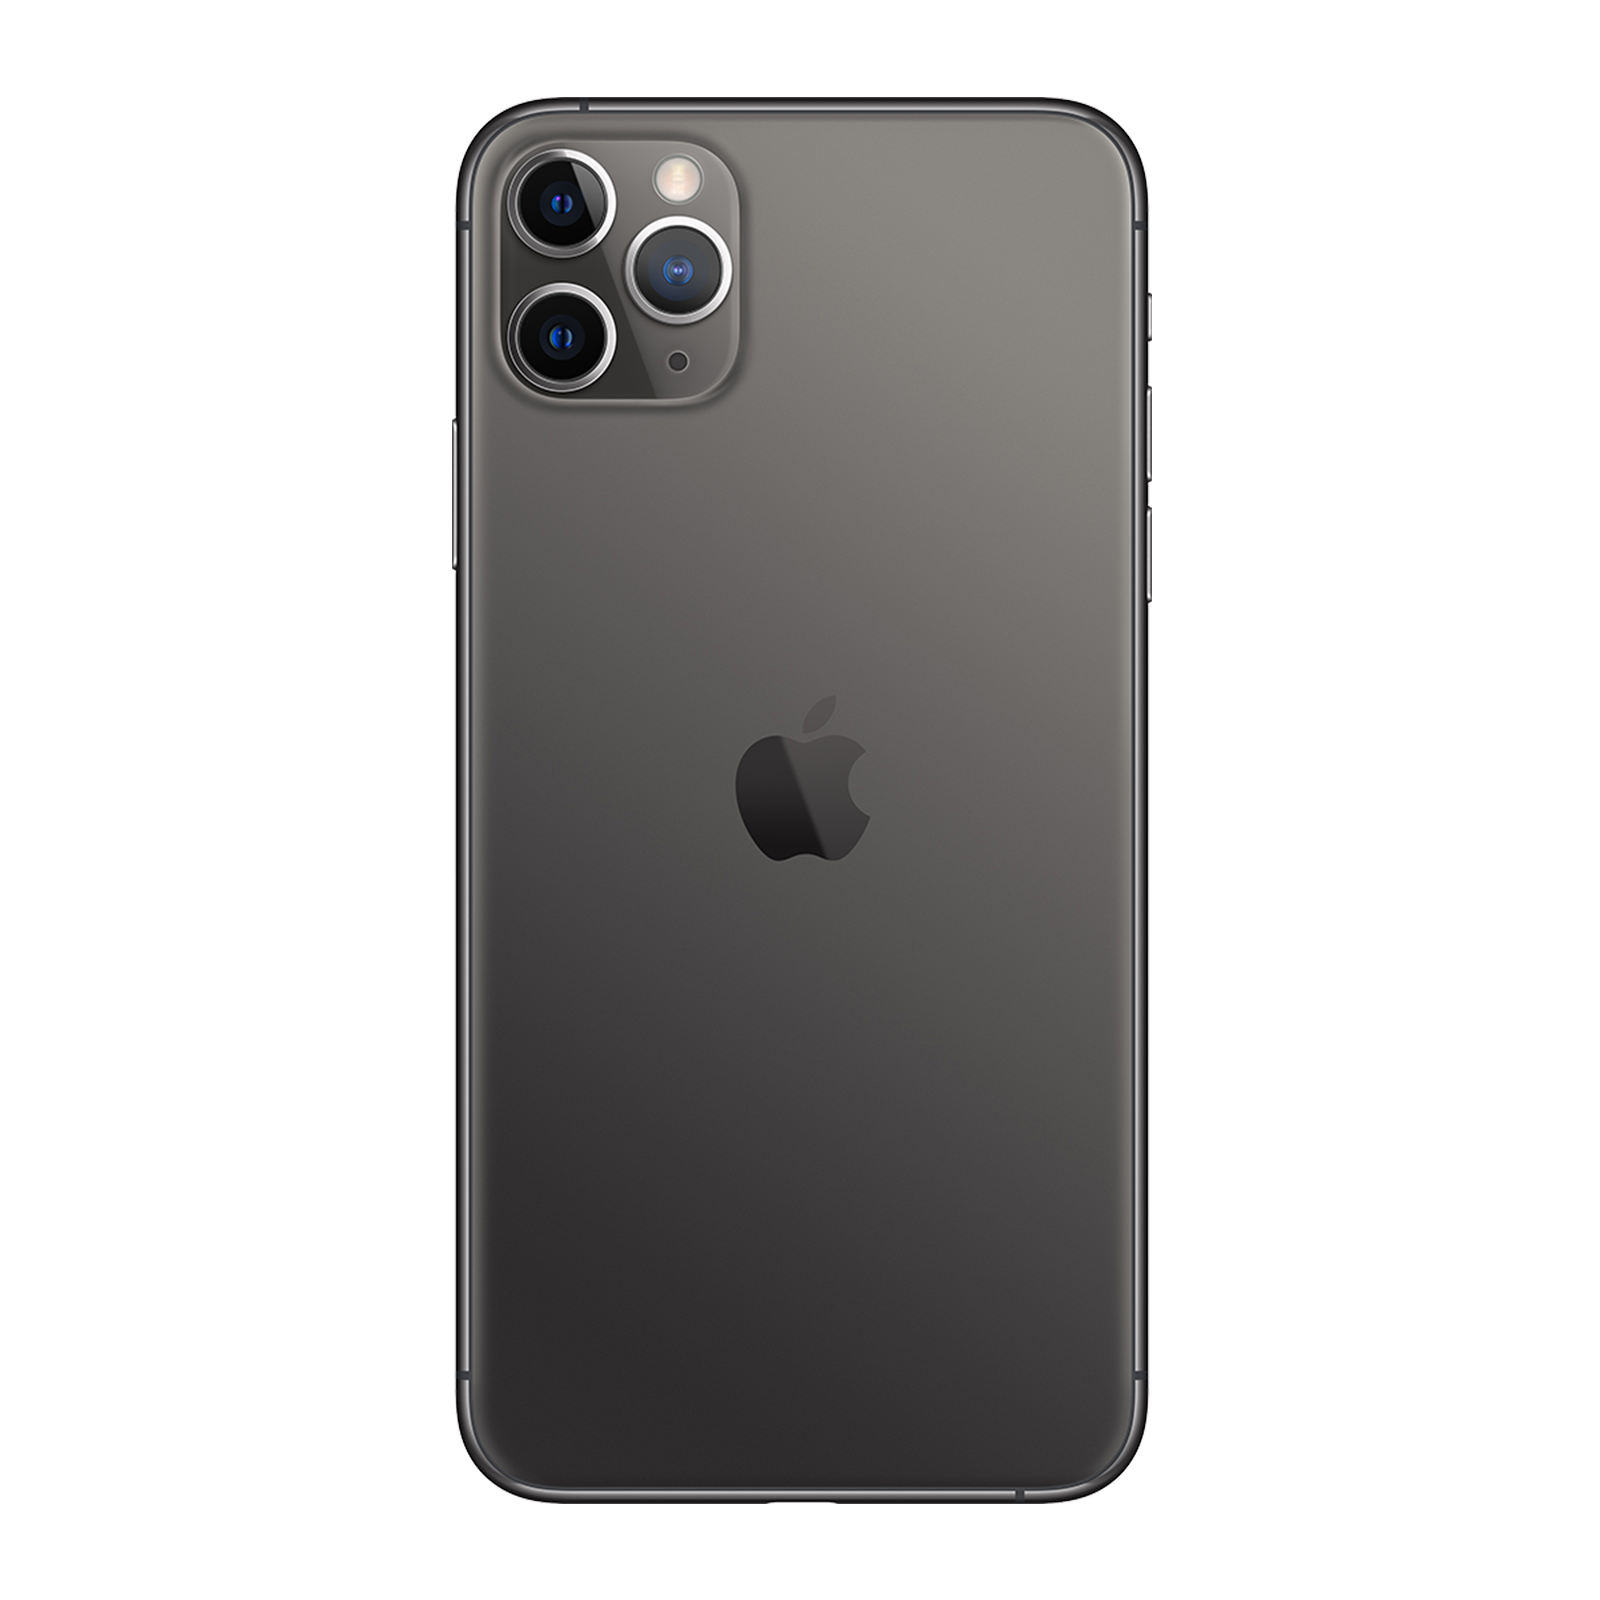 Apple iPhone 11 Pro Max 512GB Space Grey Pristine - T-Mobile